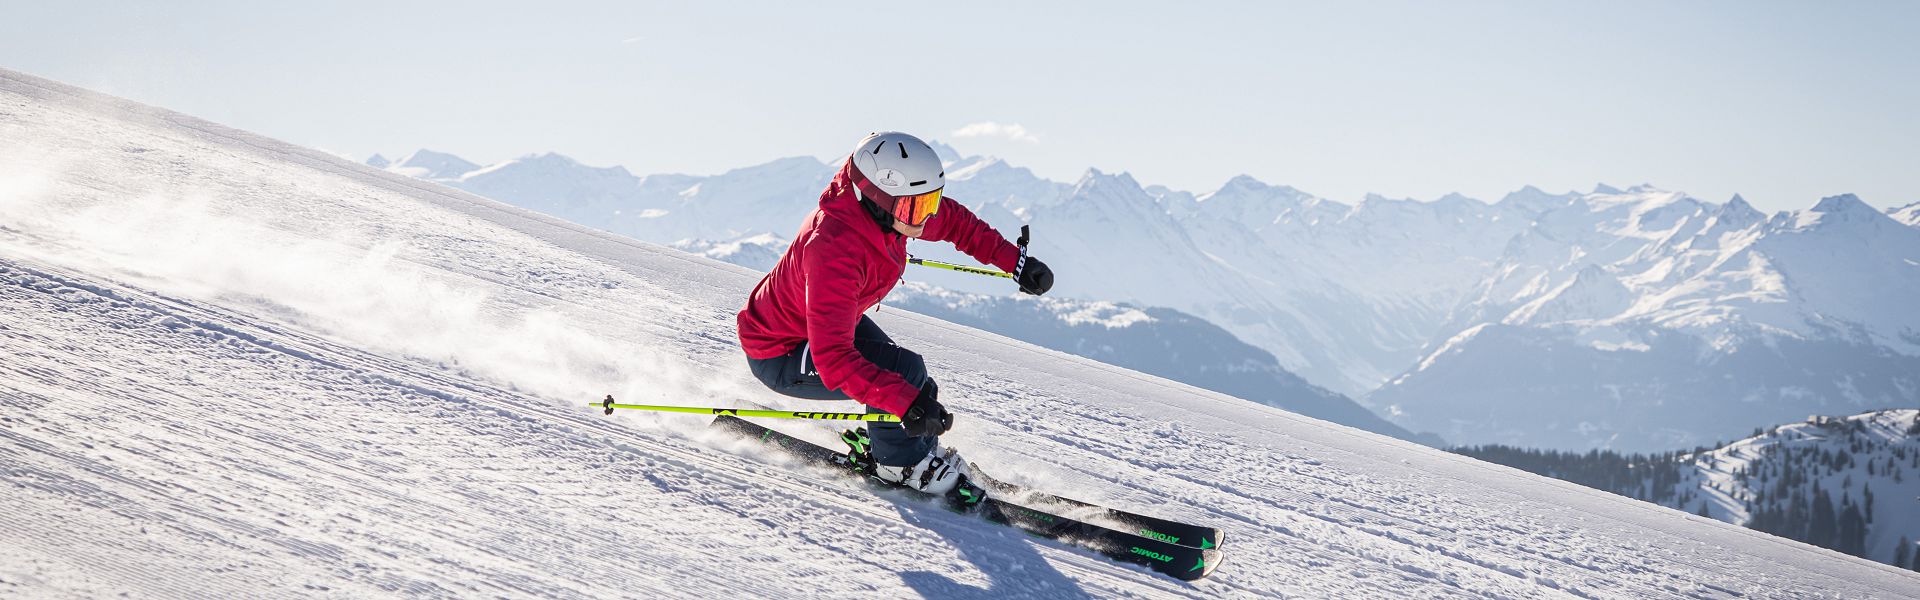 Skifahren (c) TVB Kitzbüheler Alpen-Brixental, Fotografin Mirja Geh (71)